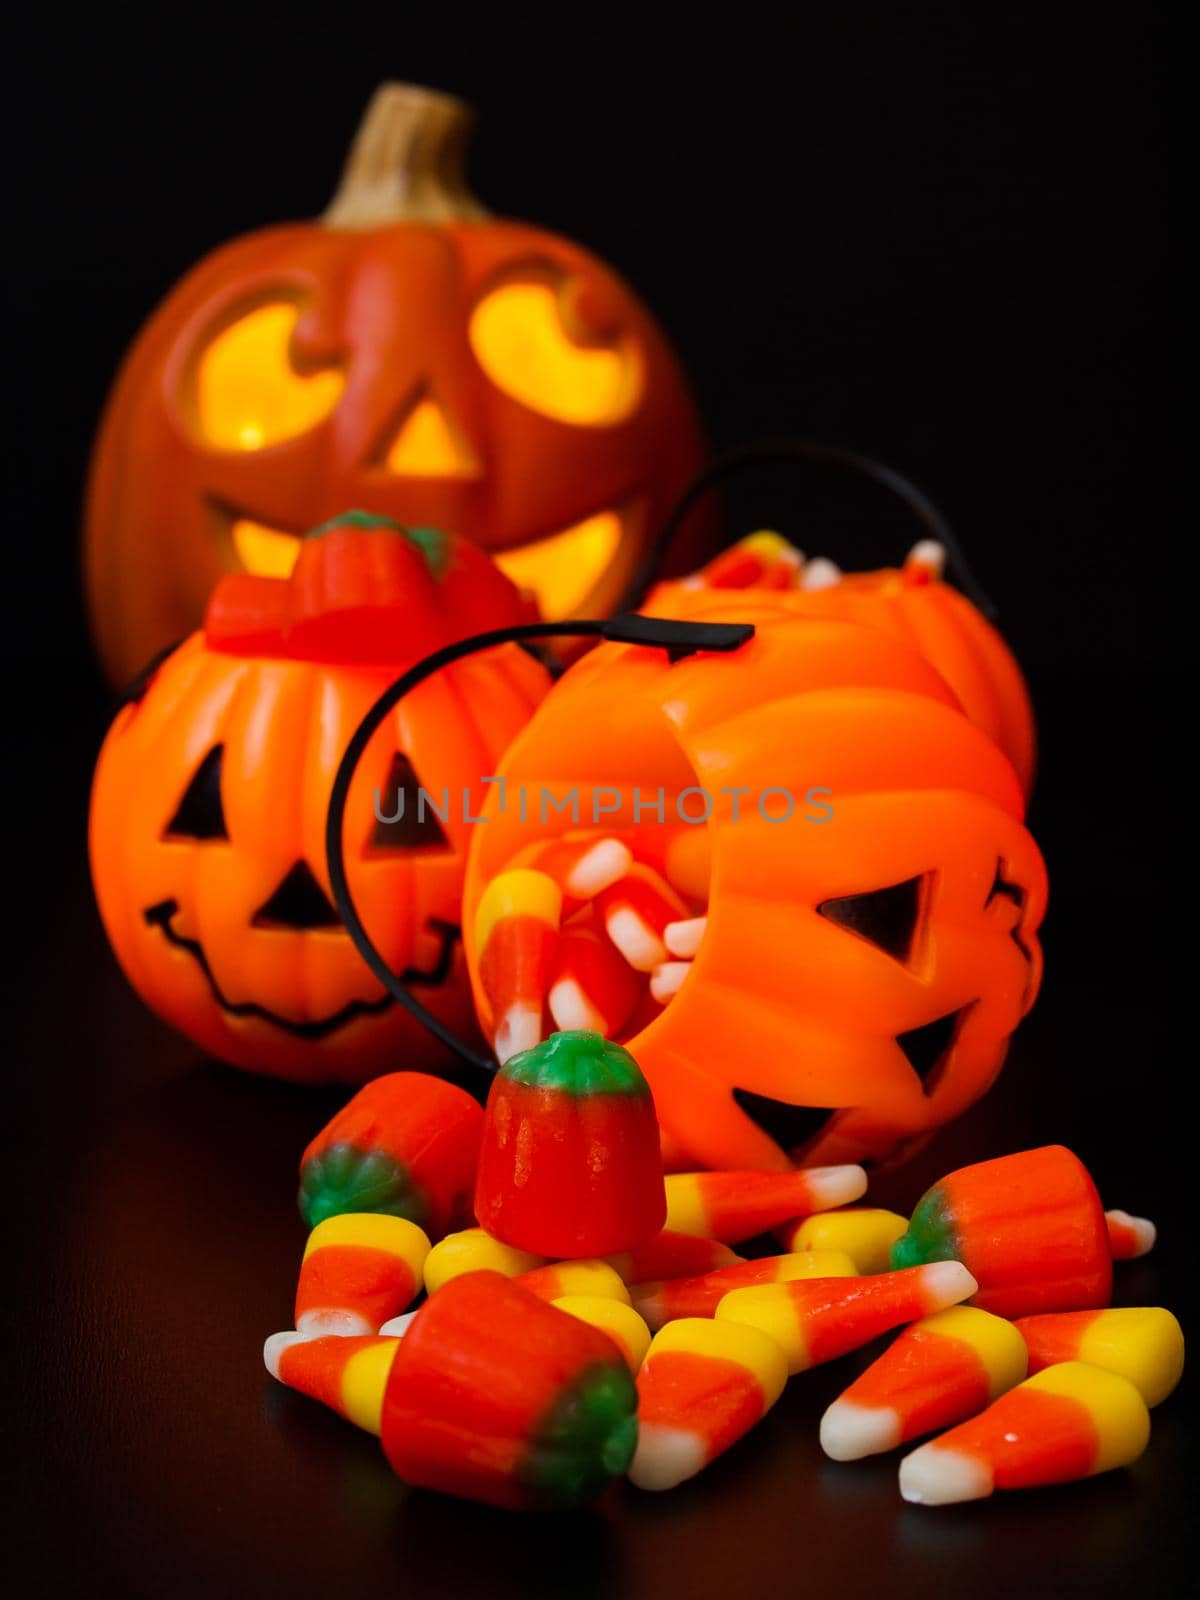 Lit jack-o'-lantern with Halloween pumpkin bags on black background.